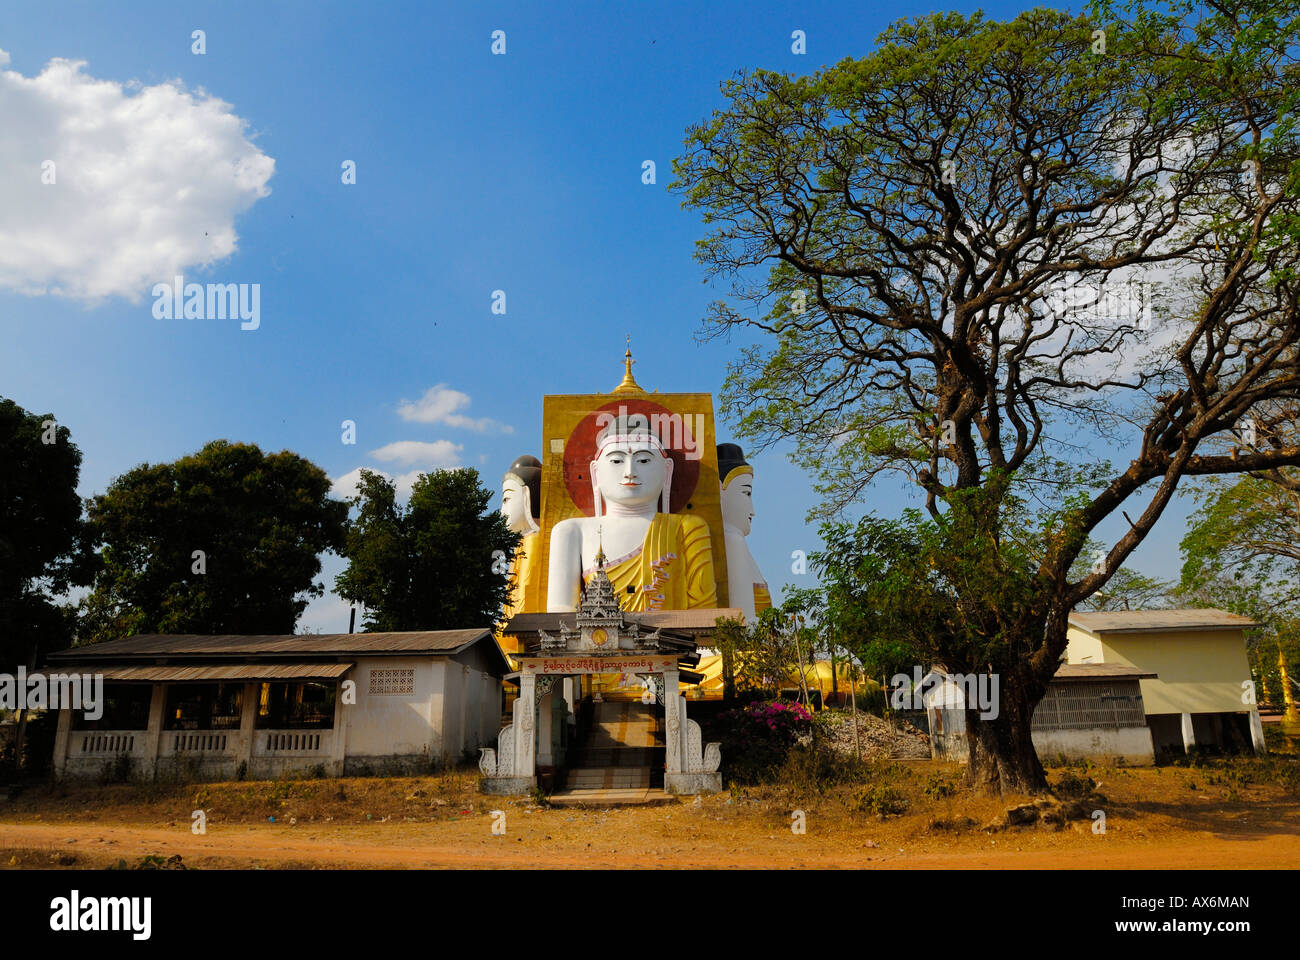 Albero nella parte anteriore del tempio buddista, Kyaikpun Pagoda Kyaik Pun Pagoda, Bago, Myanmar Foto Stock